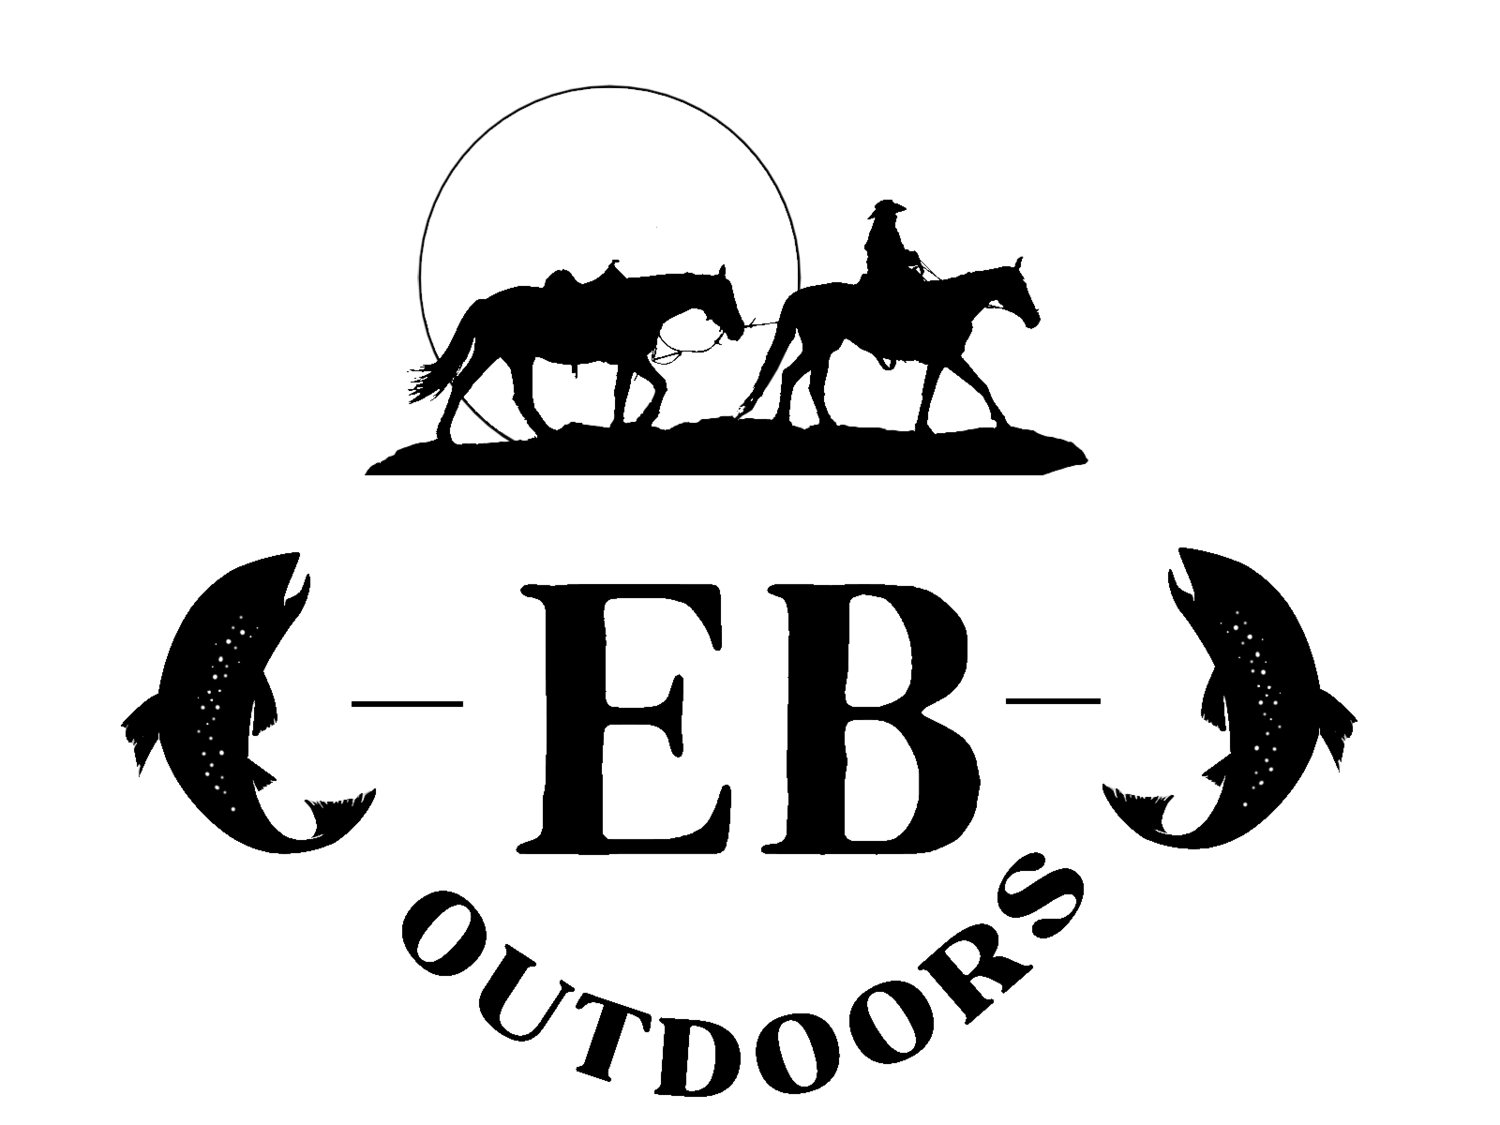 EB Outdoors